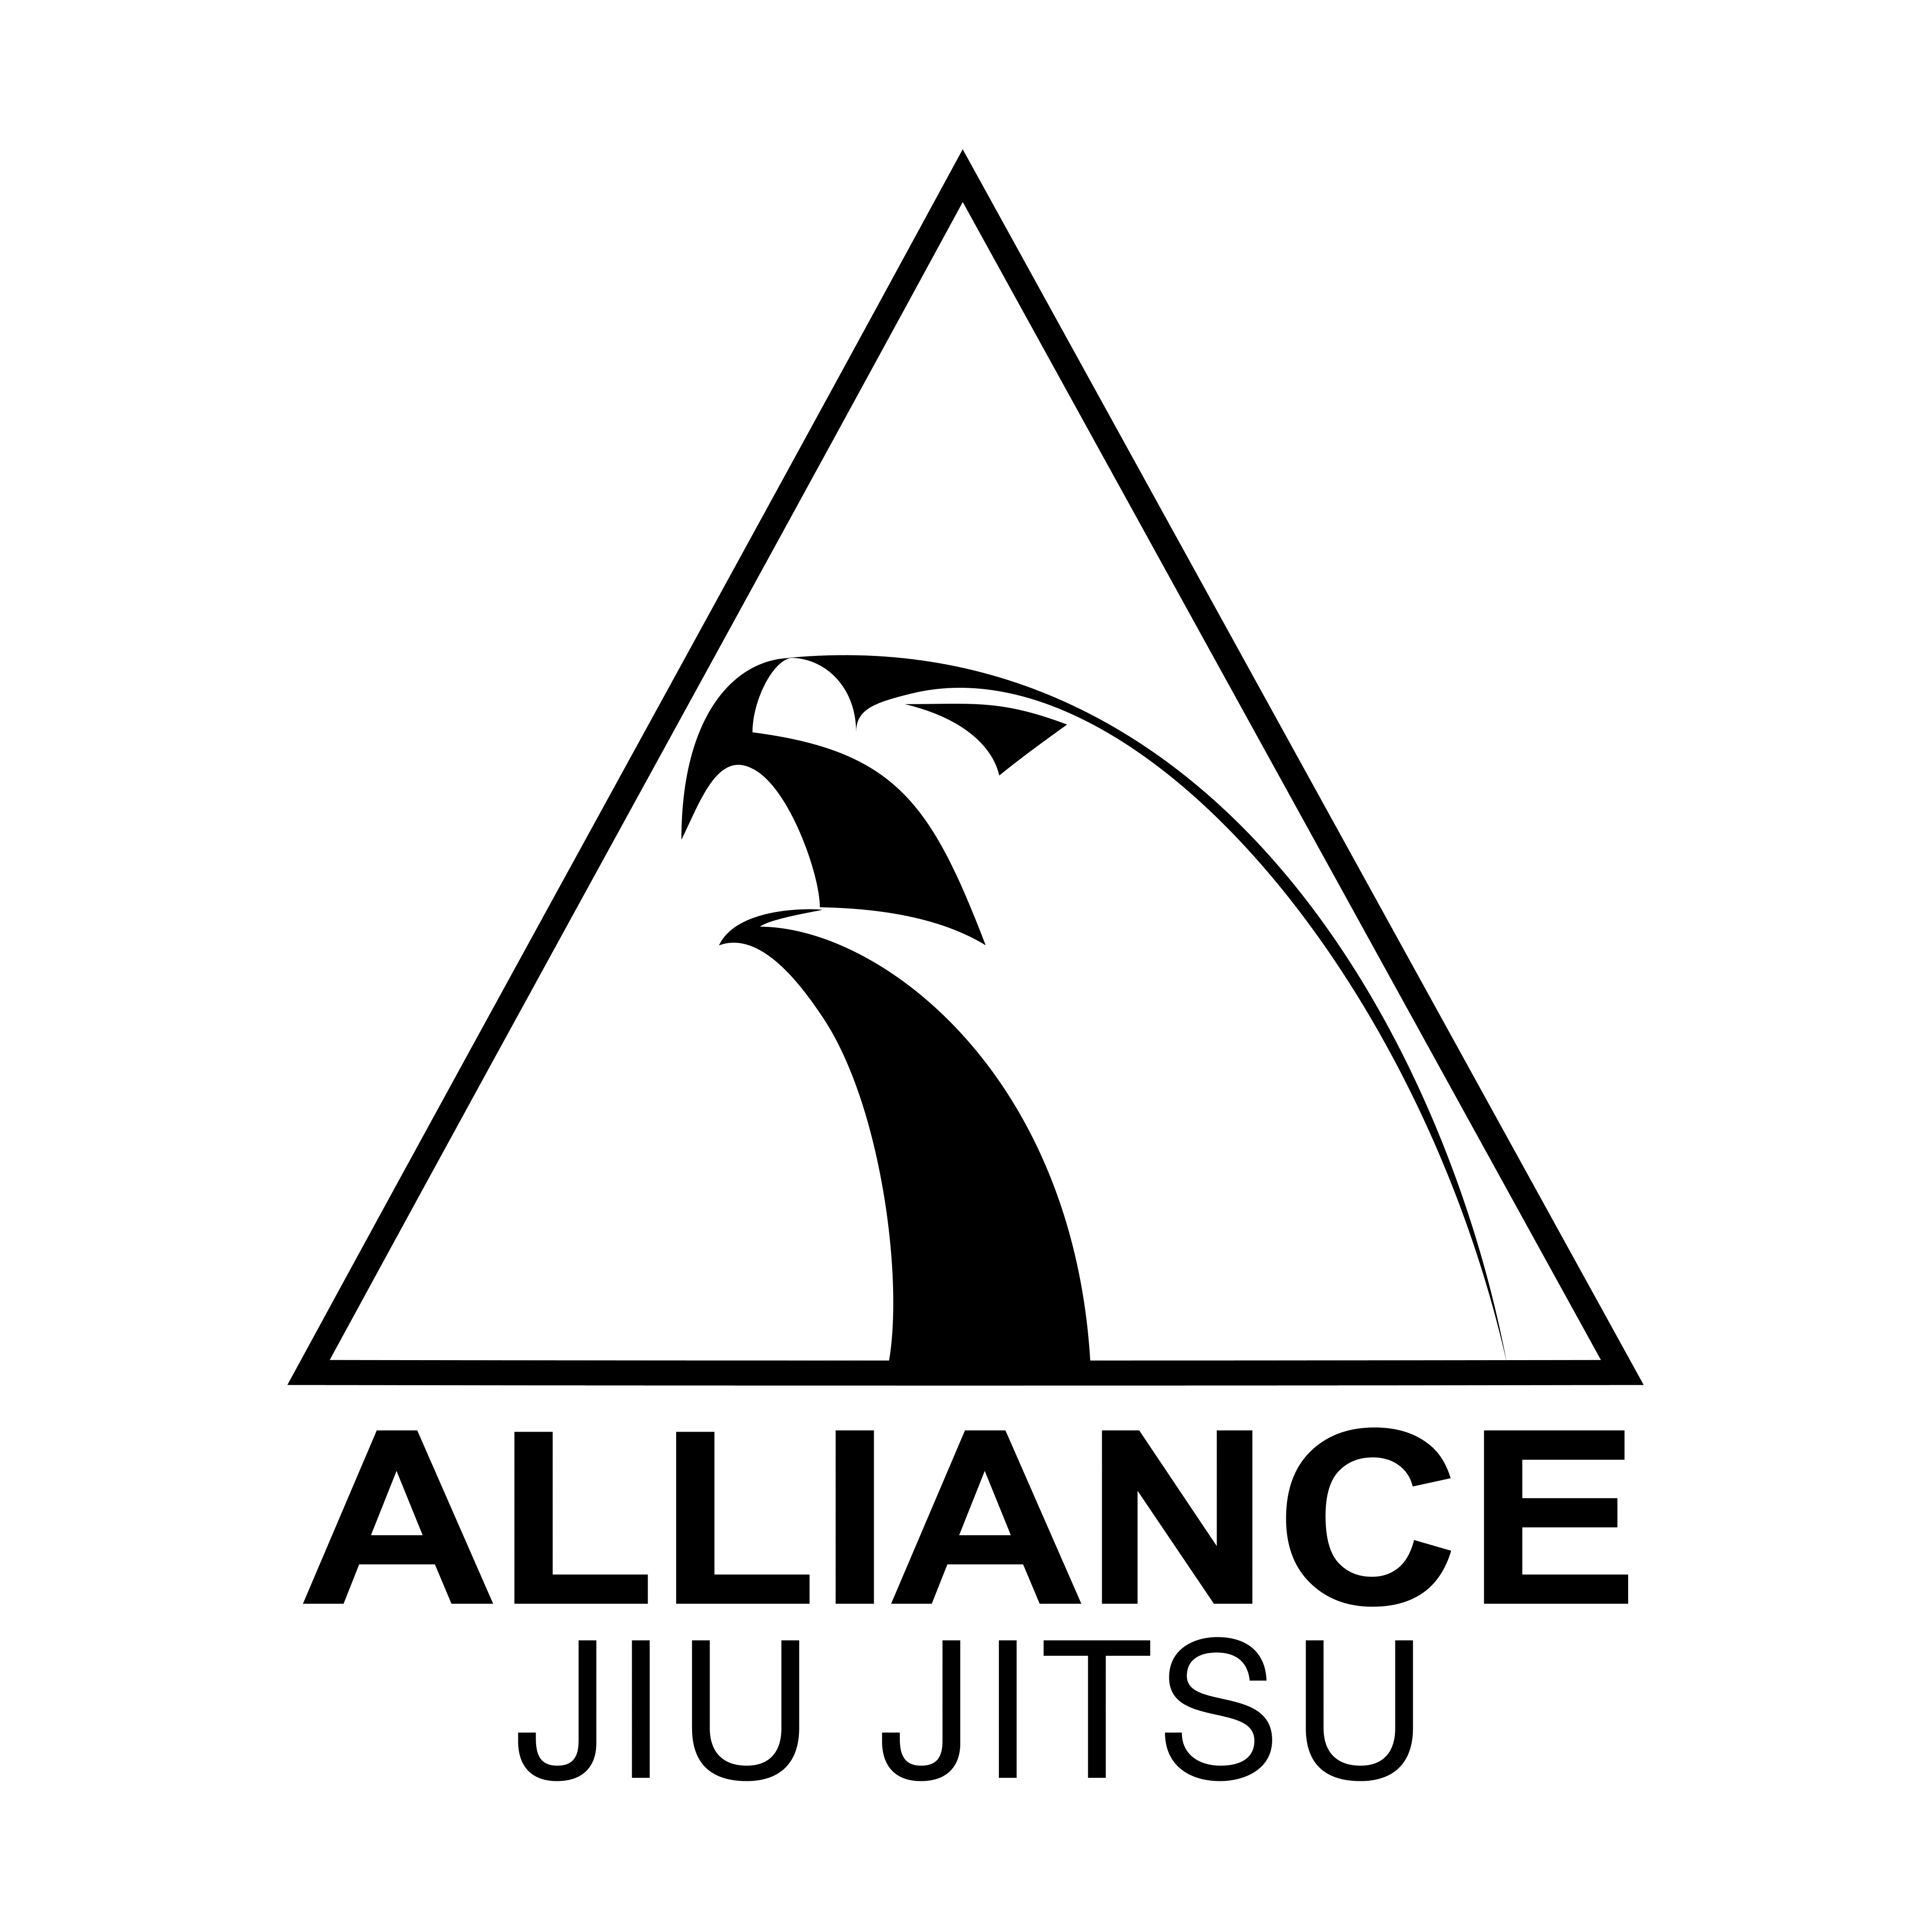 Alliance Jiu Jitsu Team - Jiu Jitsu schools for children and adults